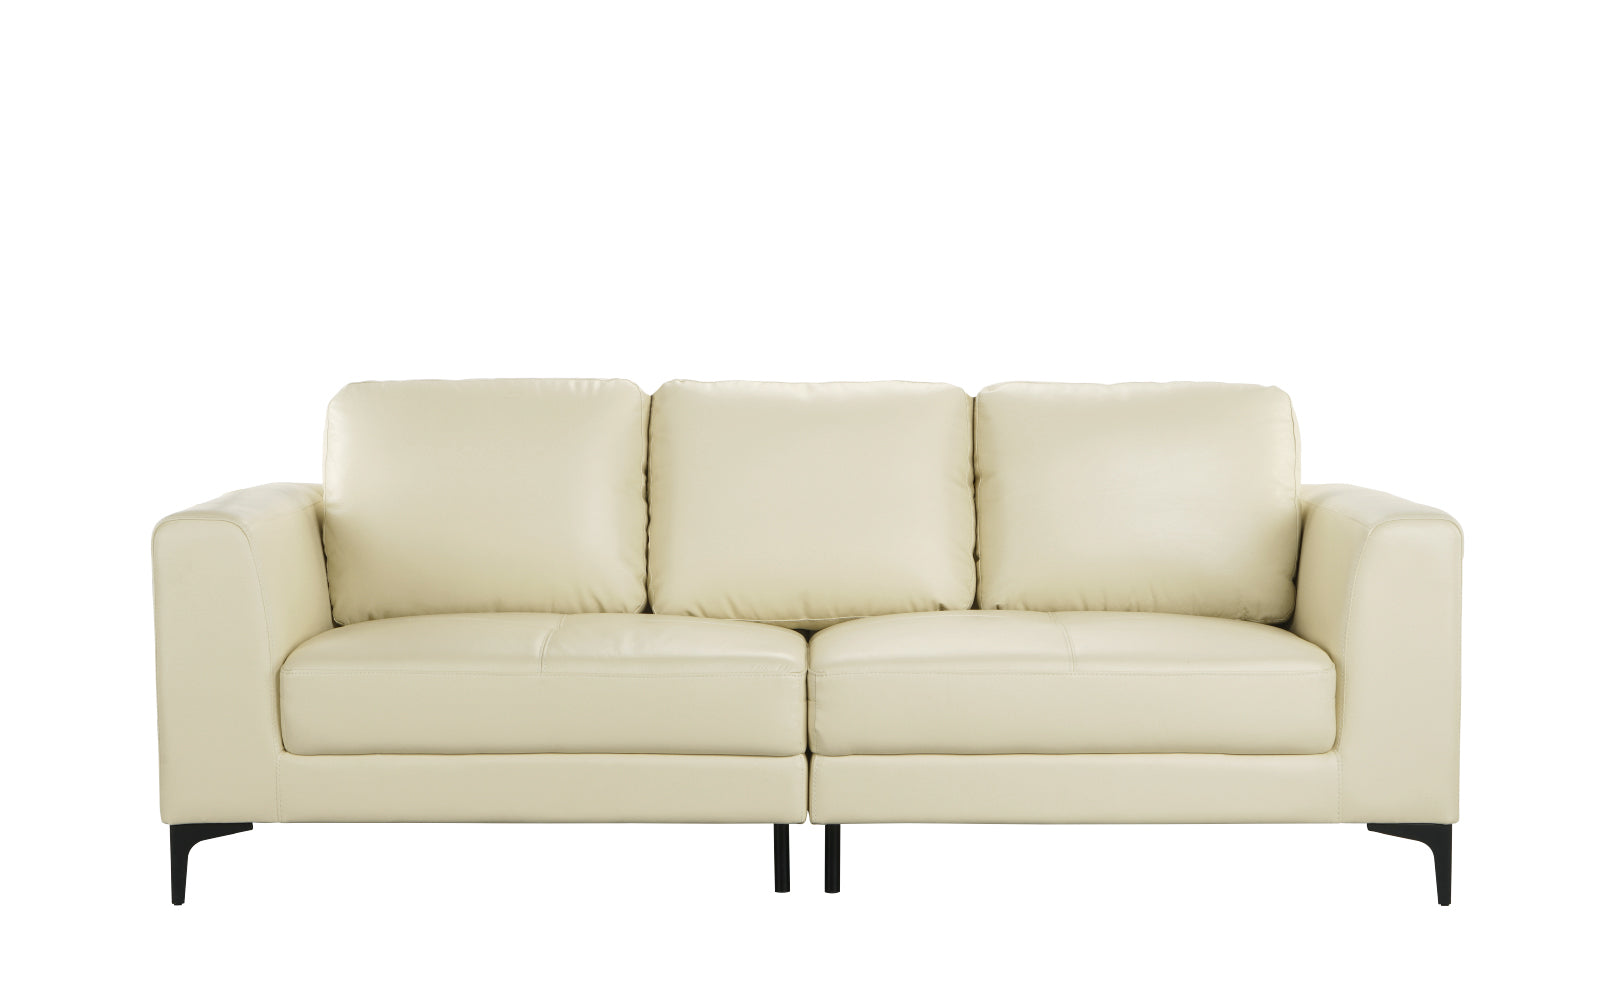 Emie Modern Leather Match Upholstered Sofa